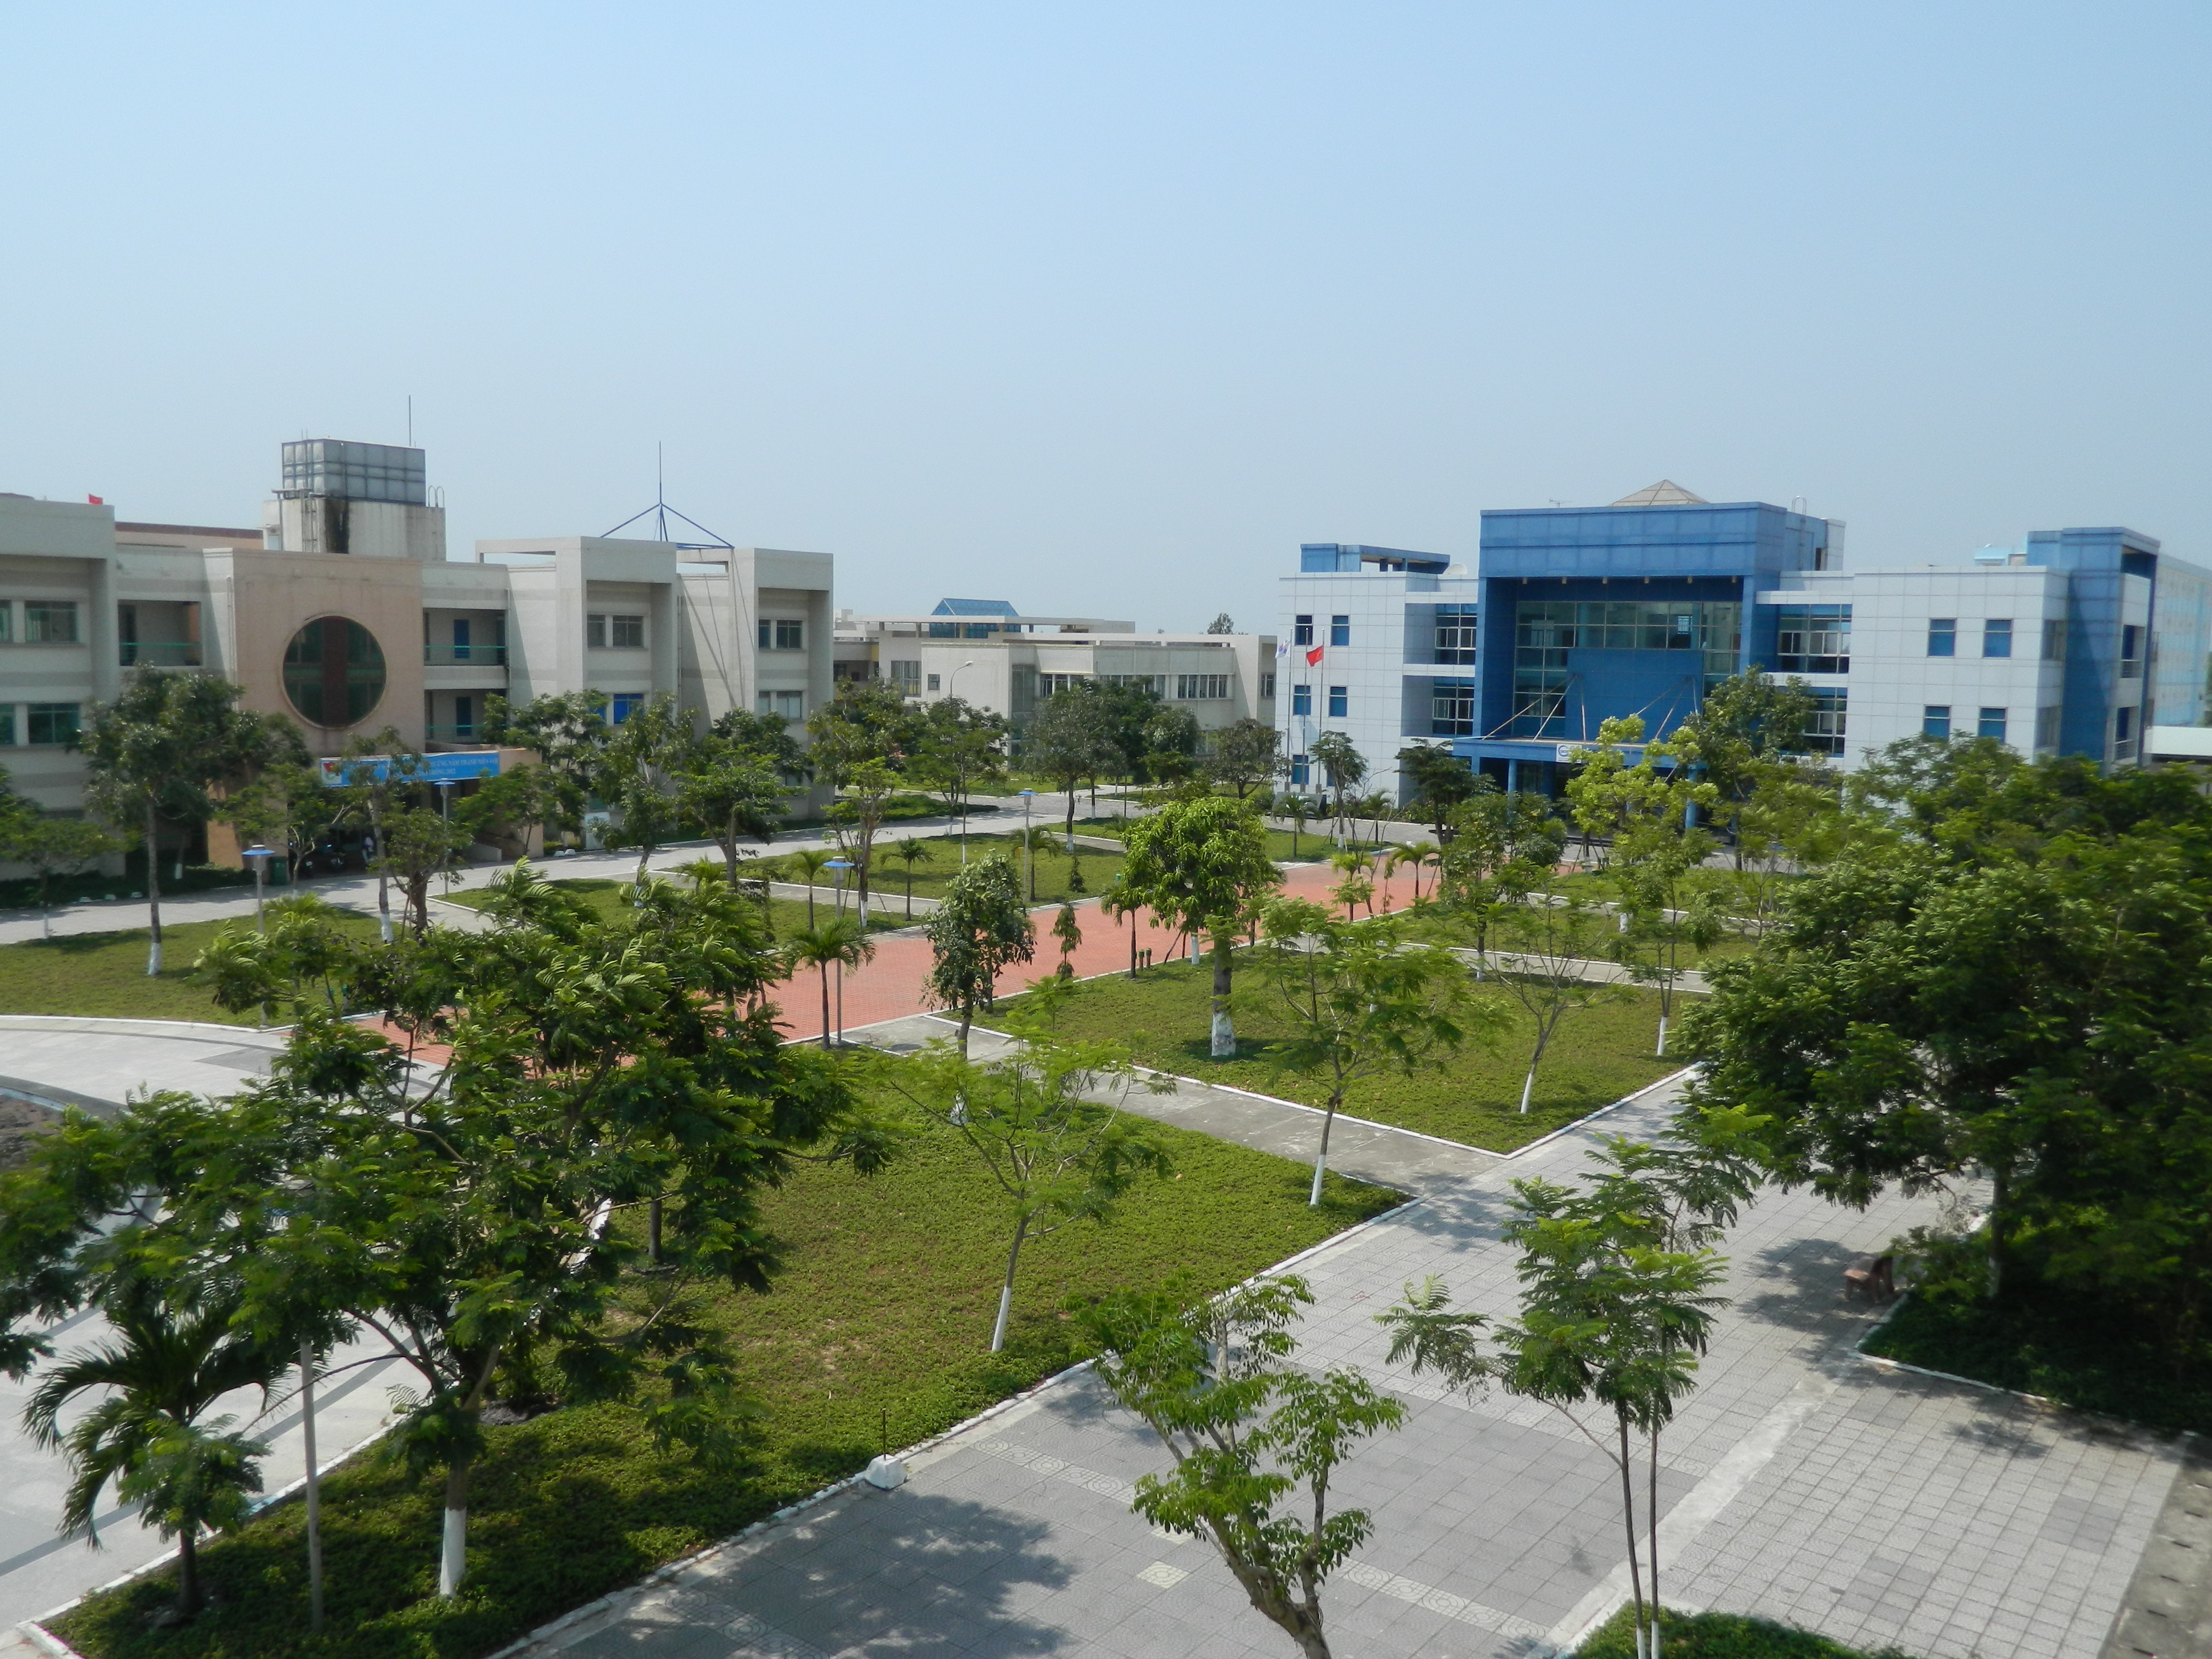 Korea - Vietnam Friendship IT College